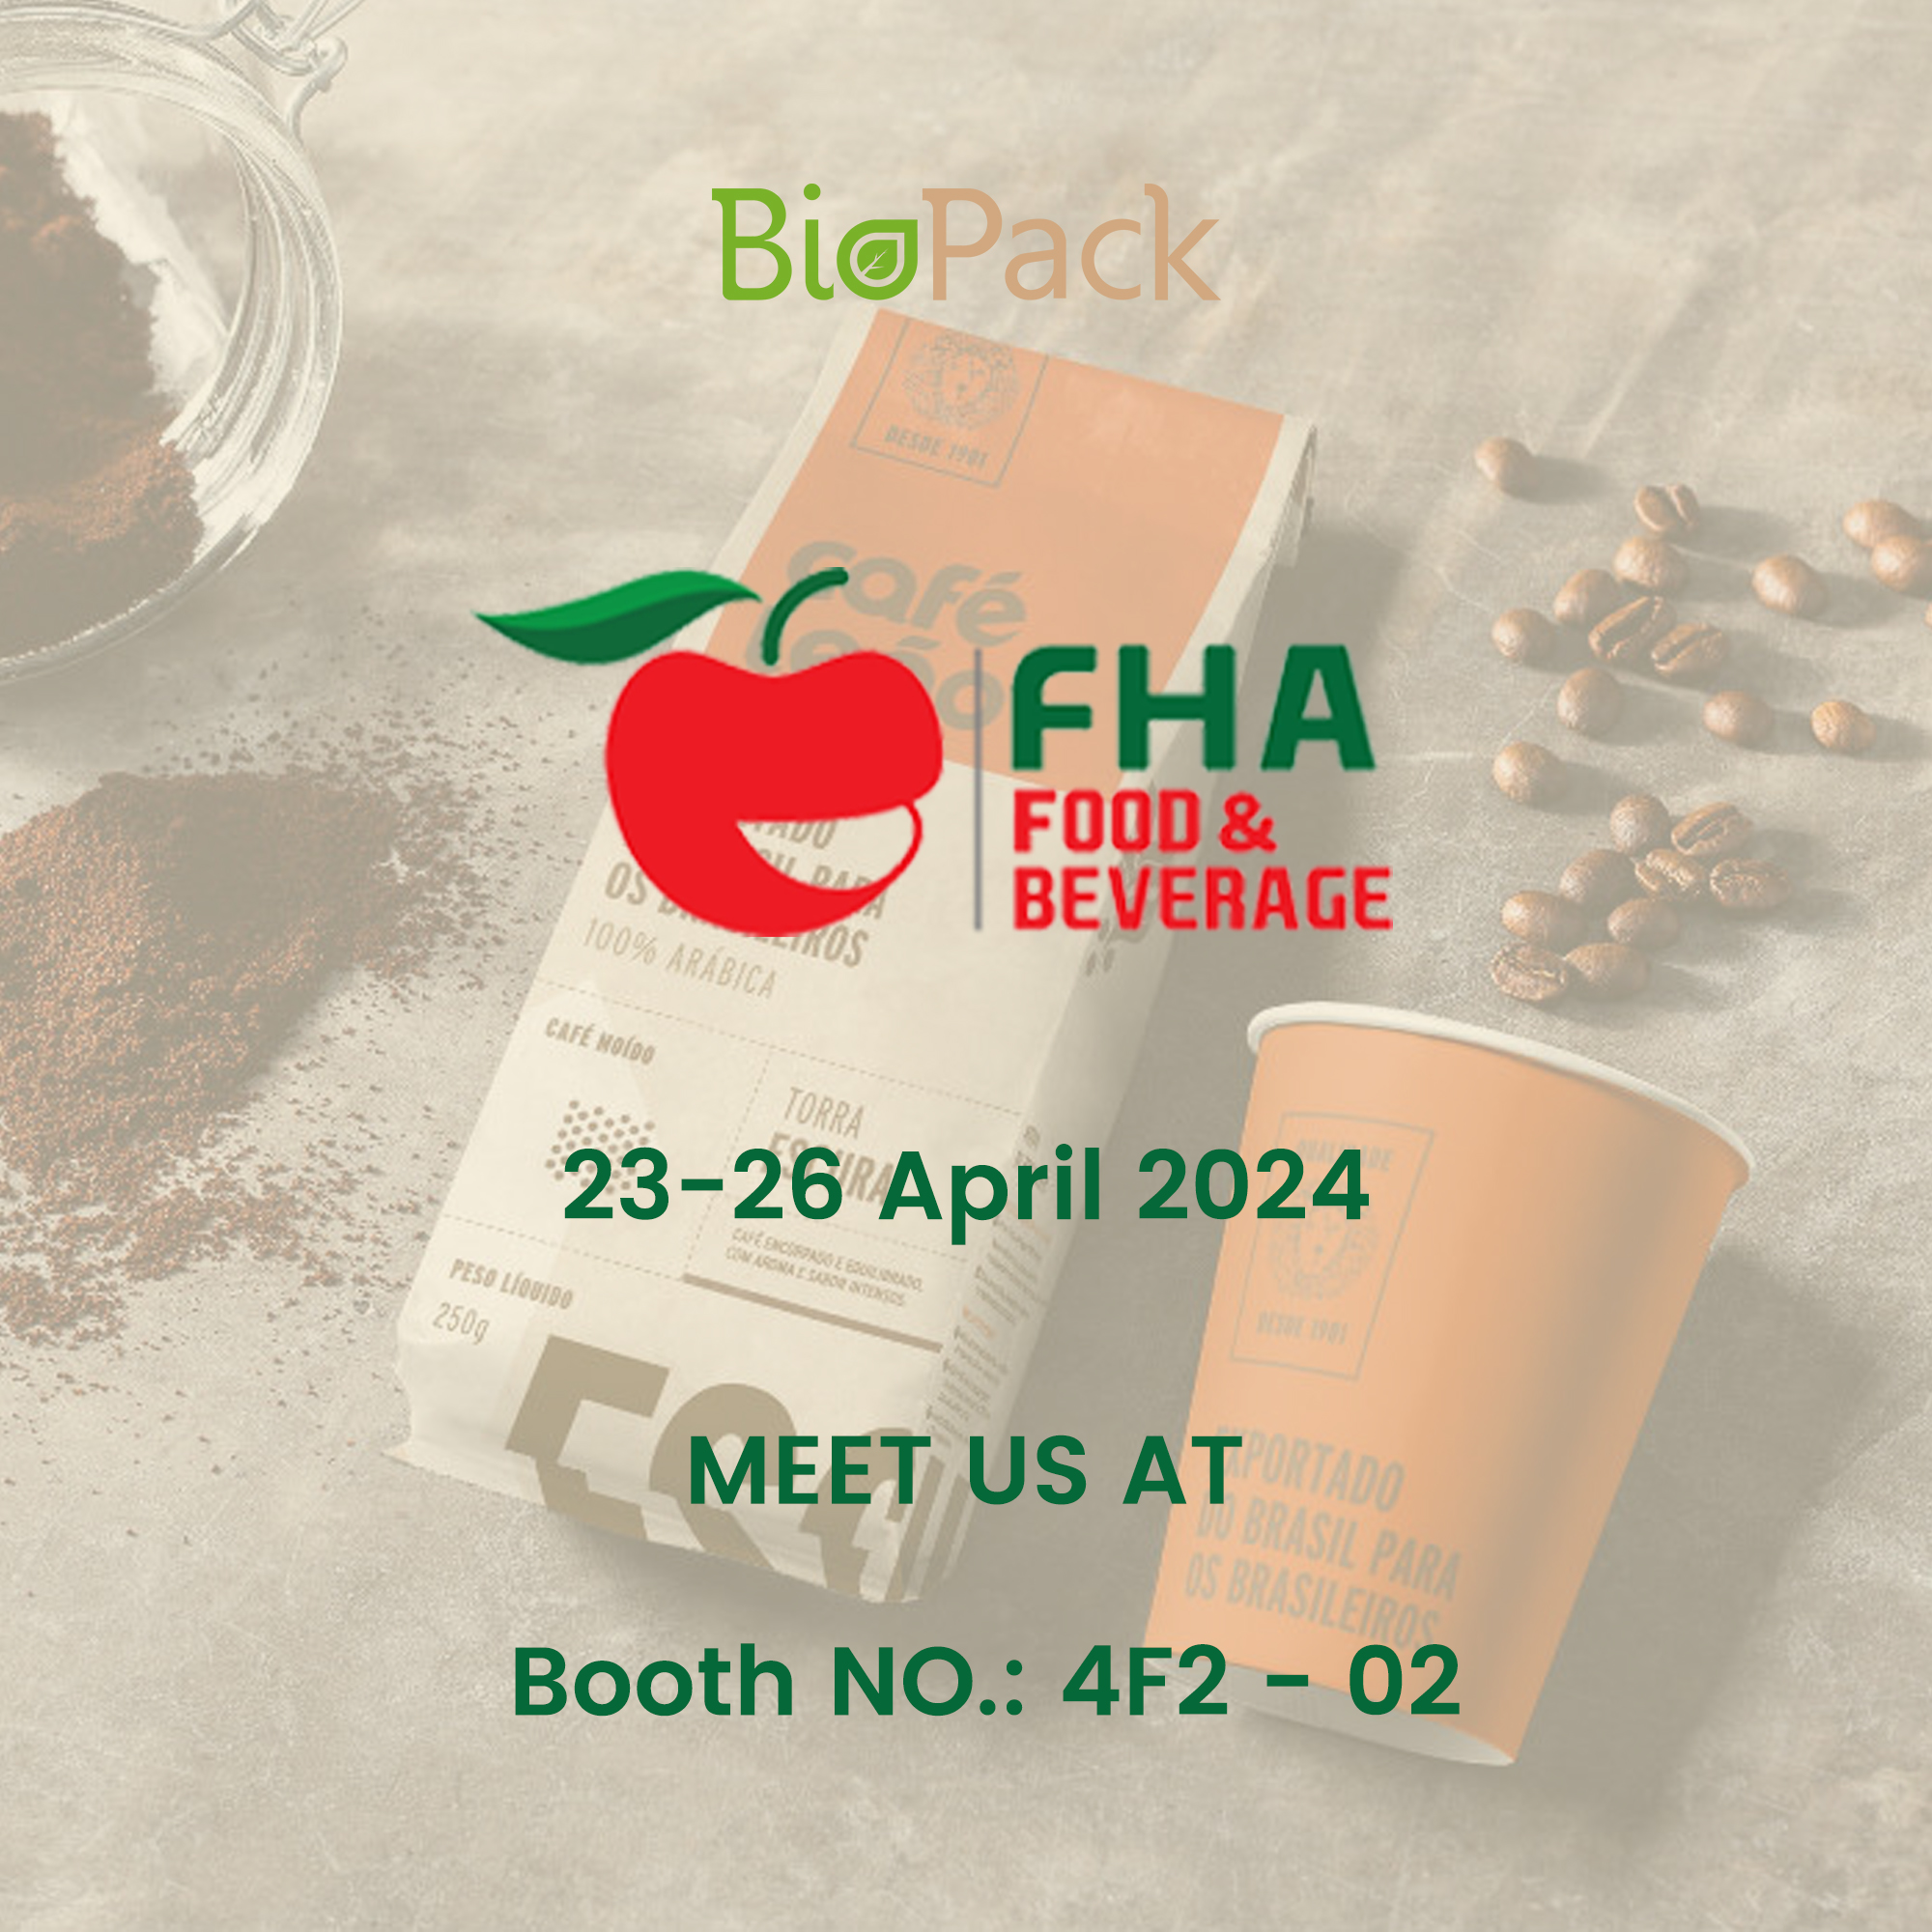 BioPack at FHA Food & Beverage Show 2024